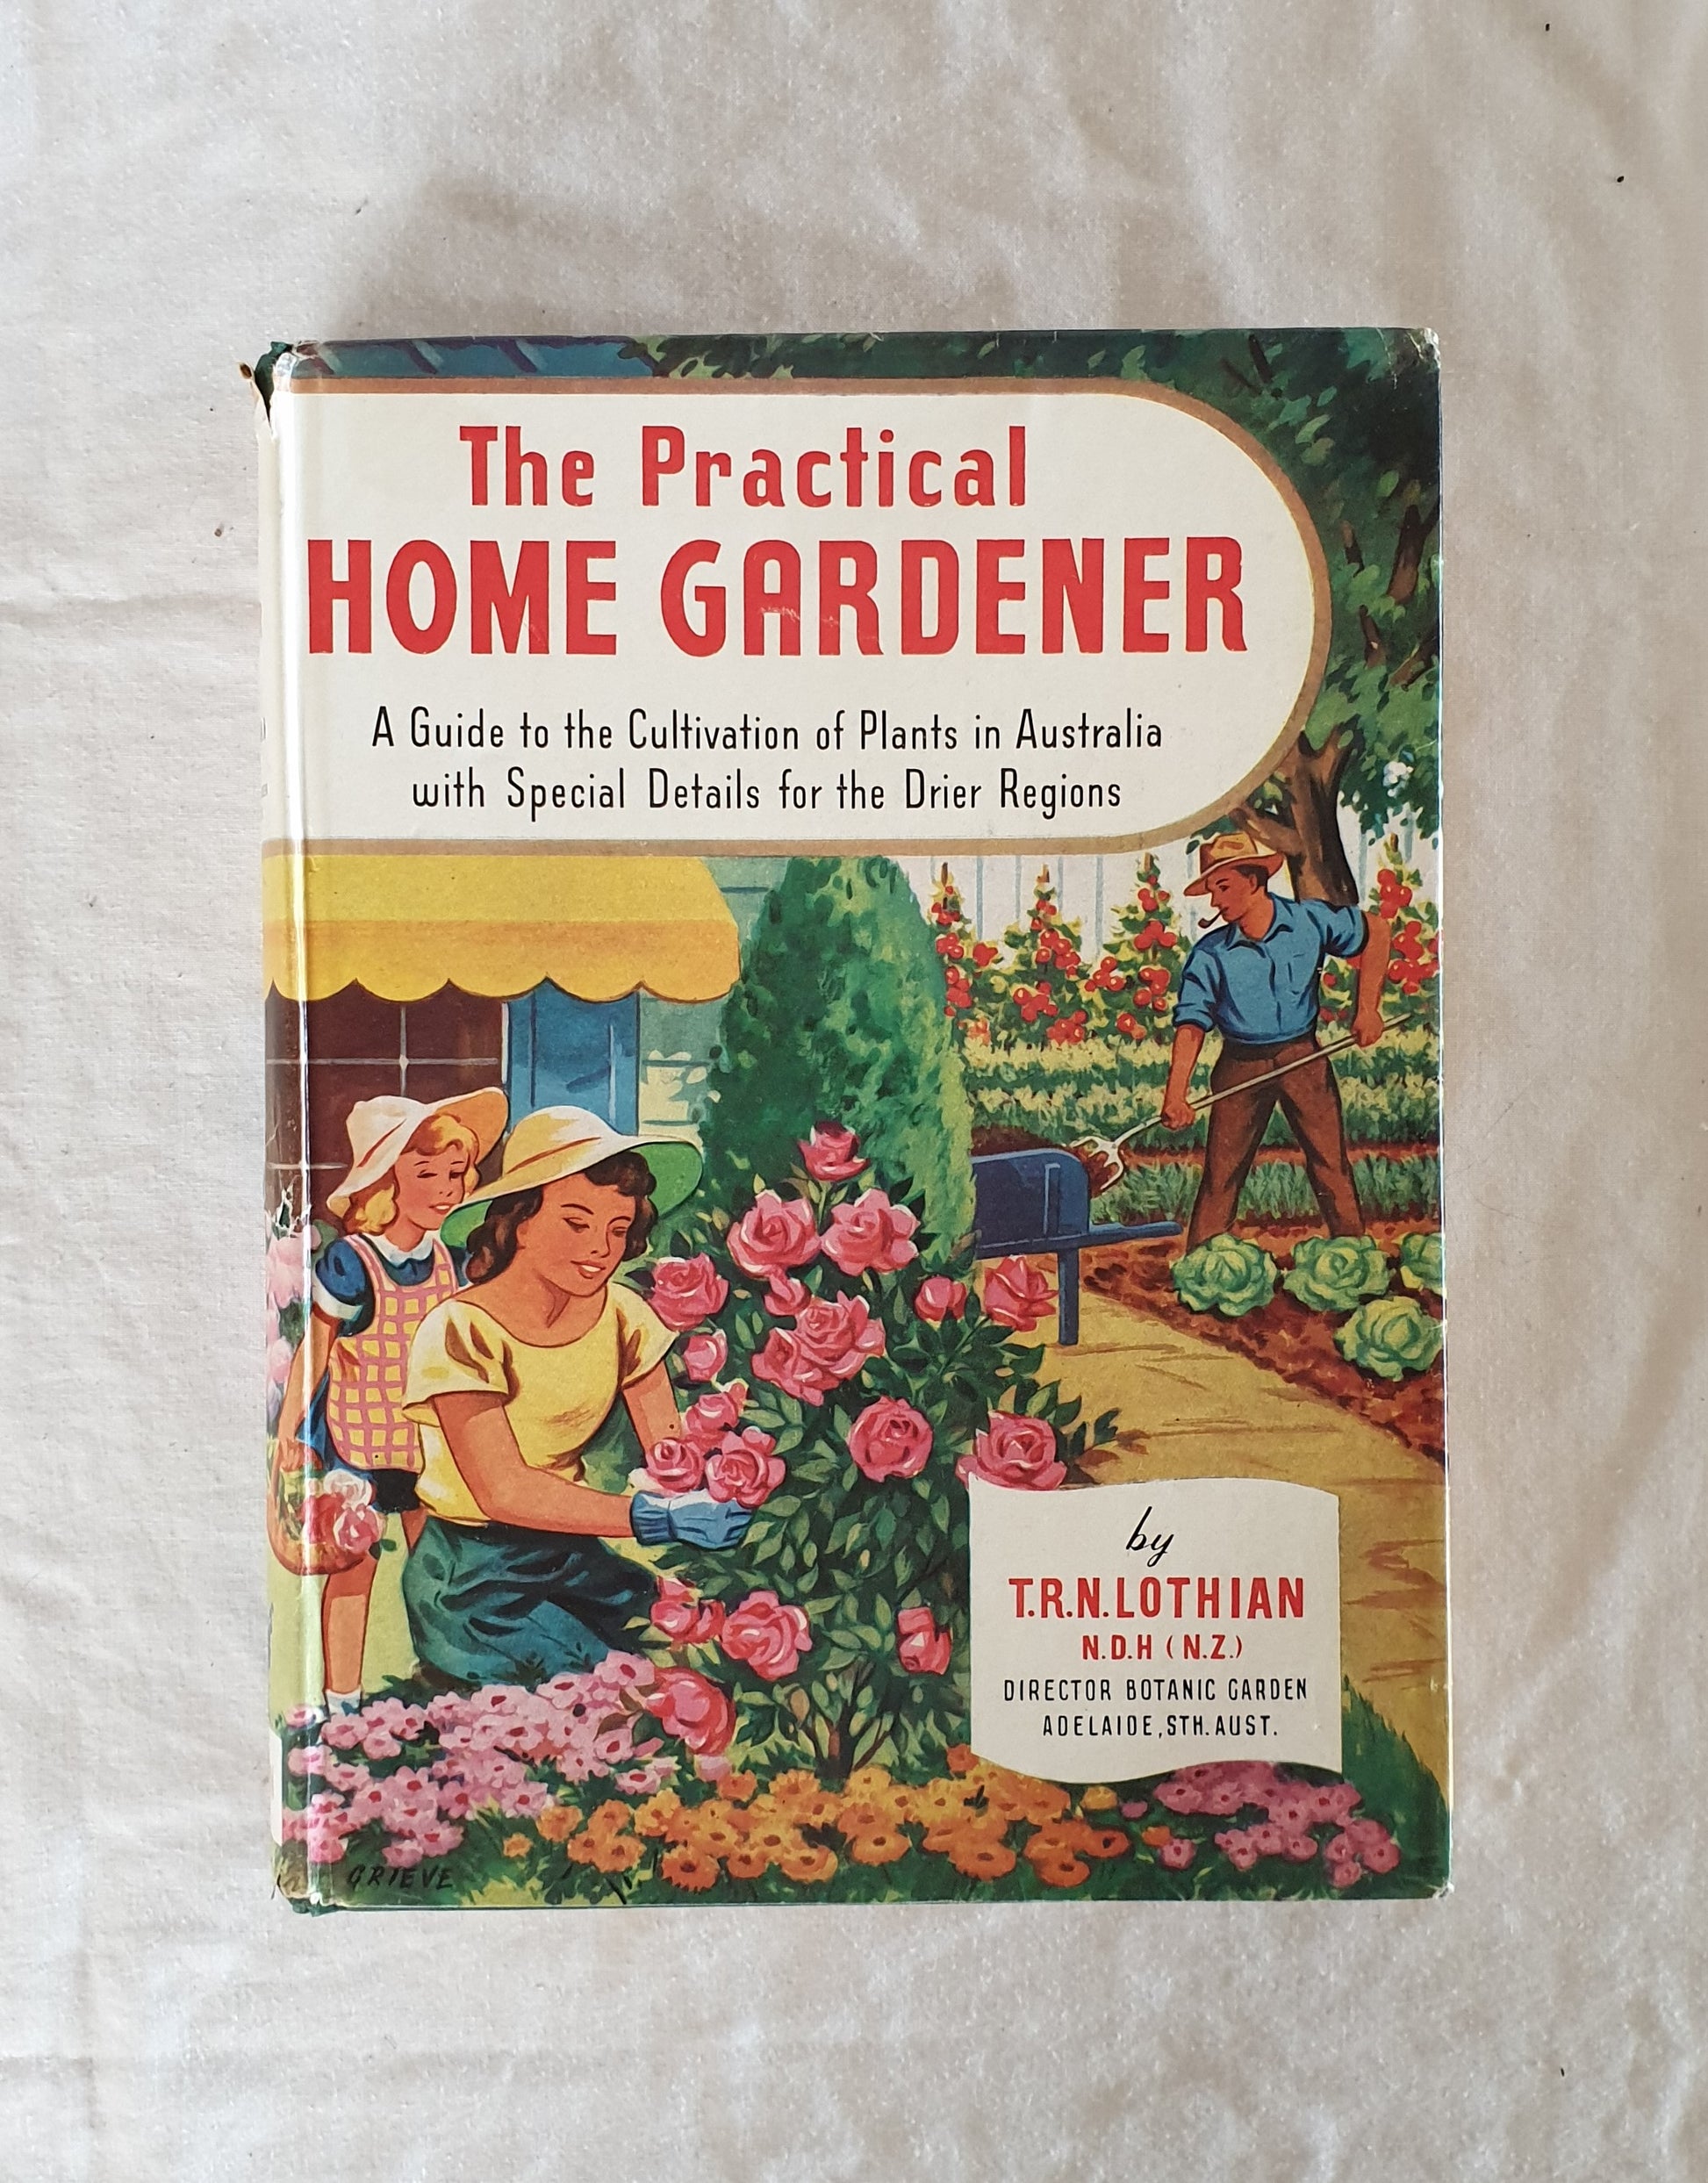 The Practical Home Gardener by T. R. N. Lothian